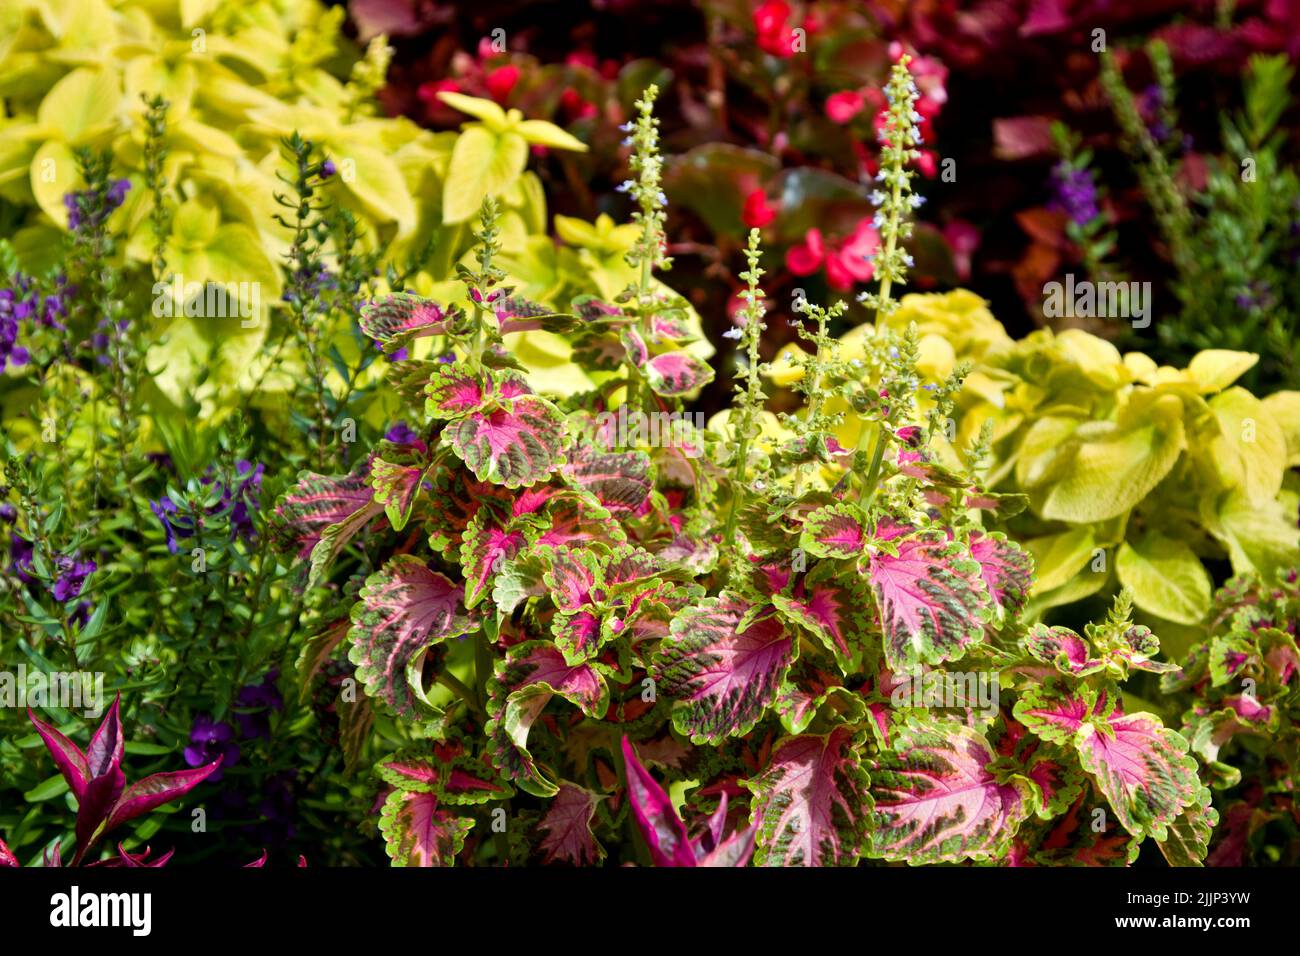 Vibrant and lush Coleus bush. Stock Photo